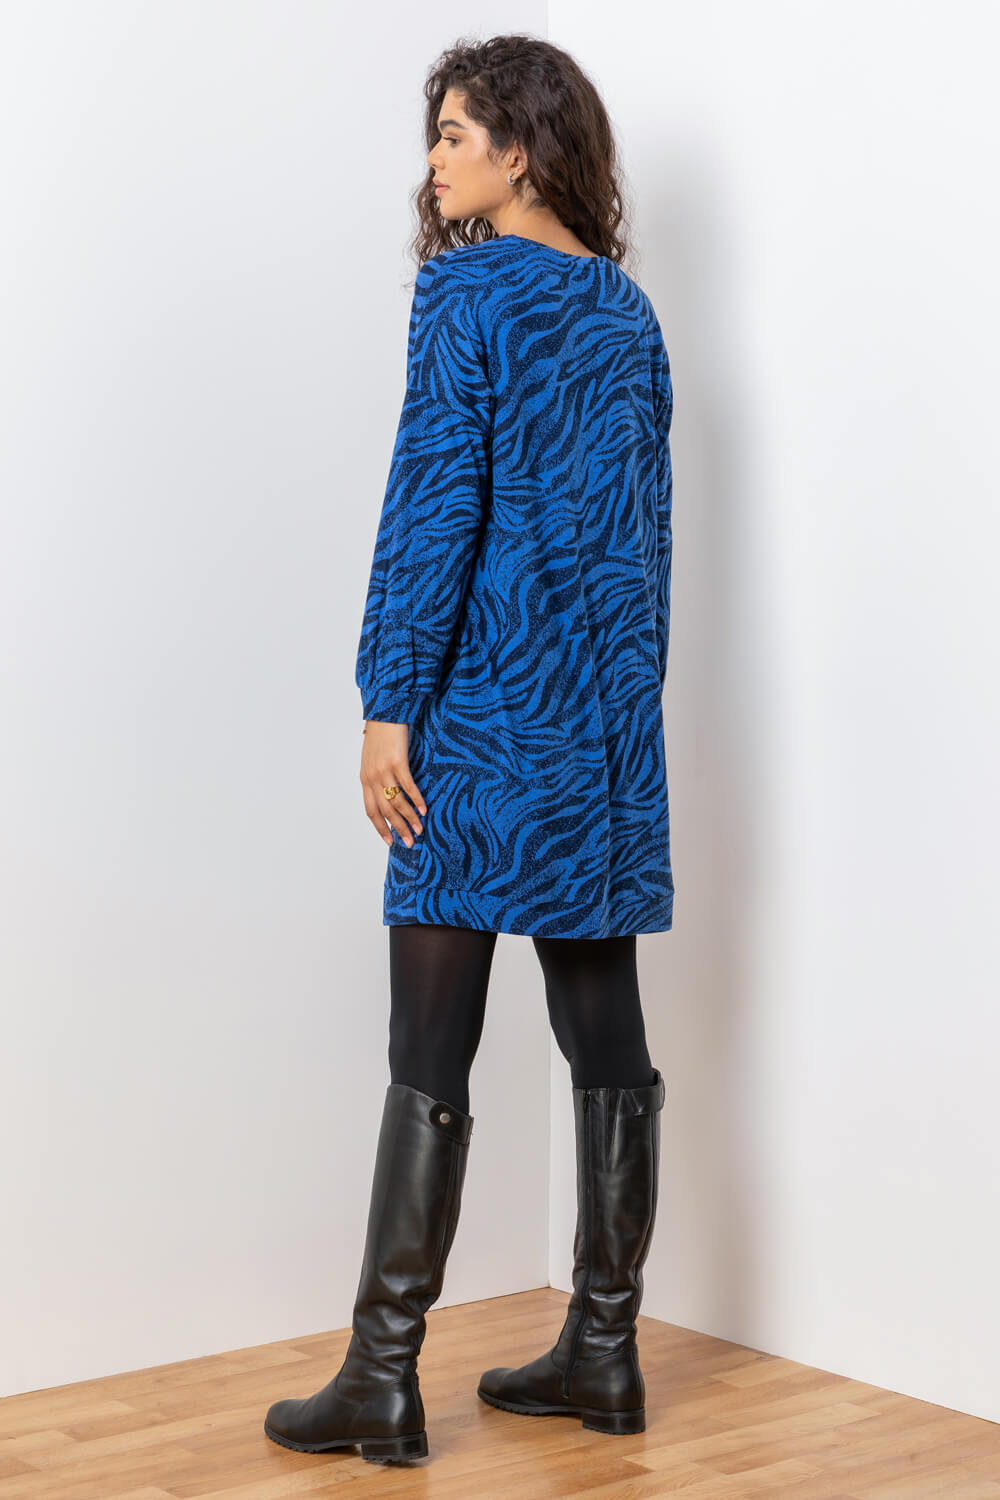 Royal Blue Animal Print Jacquard Sweater Dress, Image 2 of 5